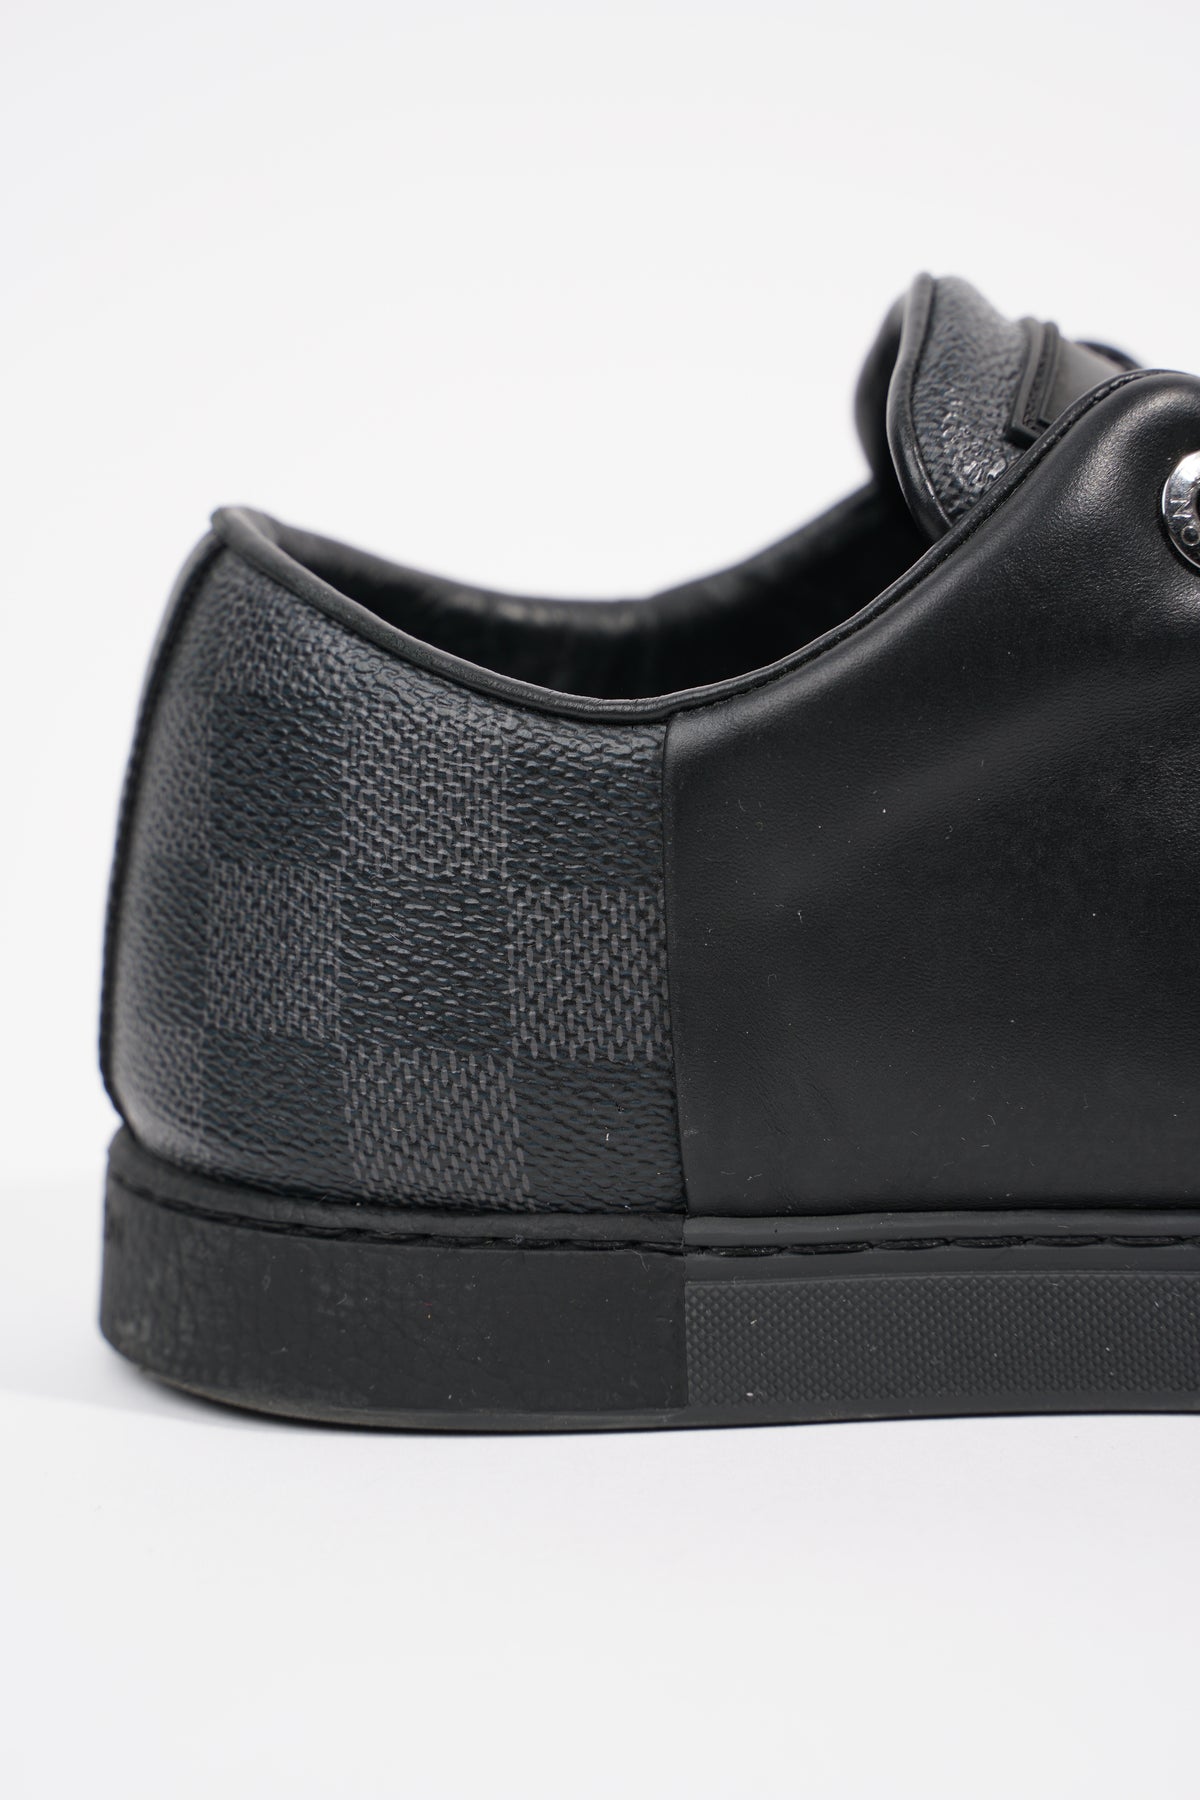 Louis Vuitton Mens Damier Sneakers Black EU 40.5 / UK 6.5 – Luxe